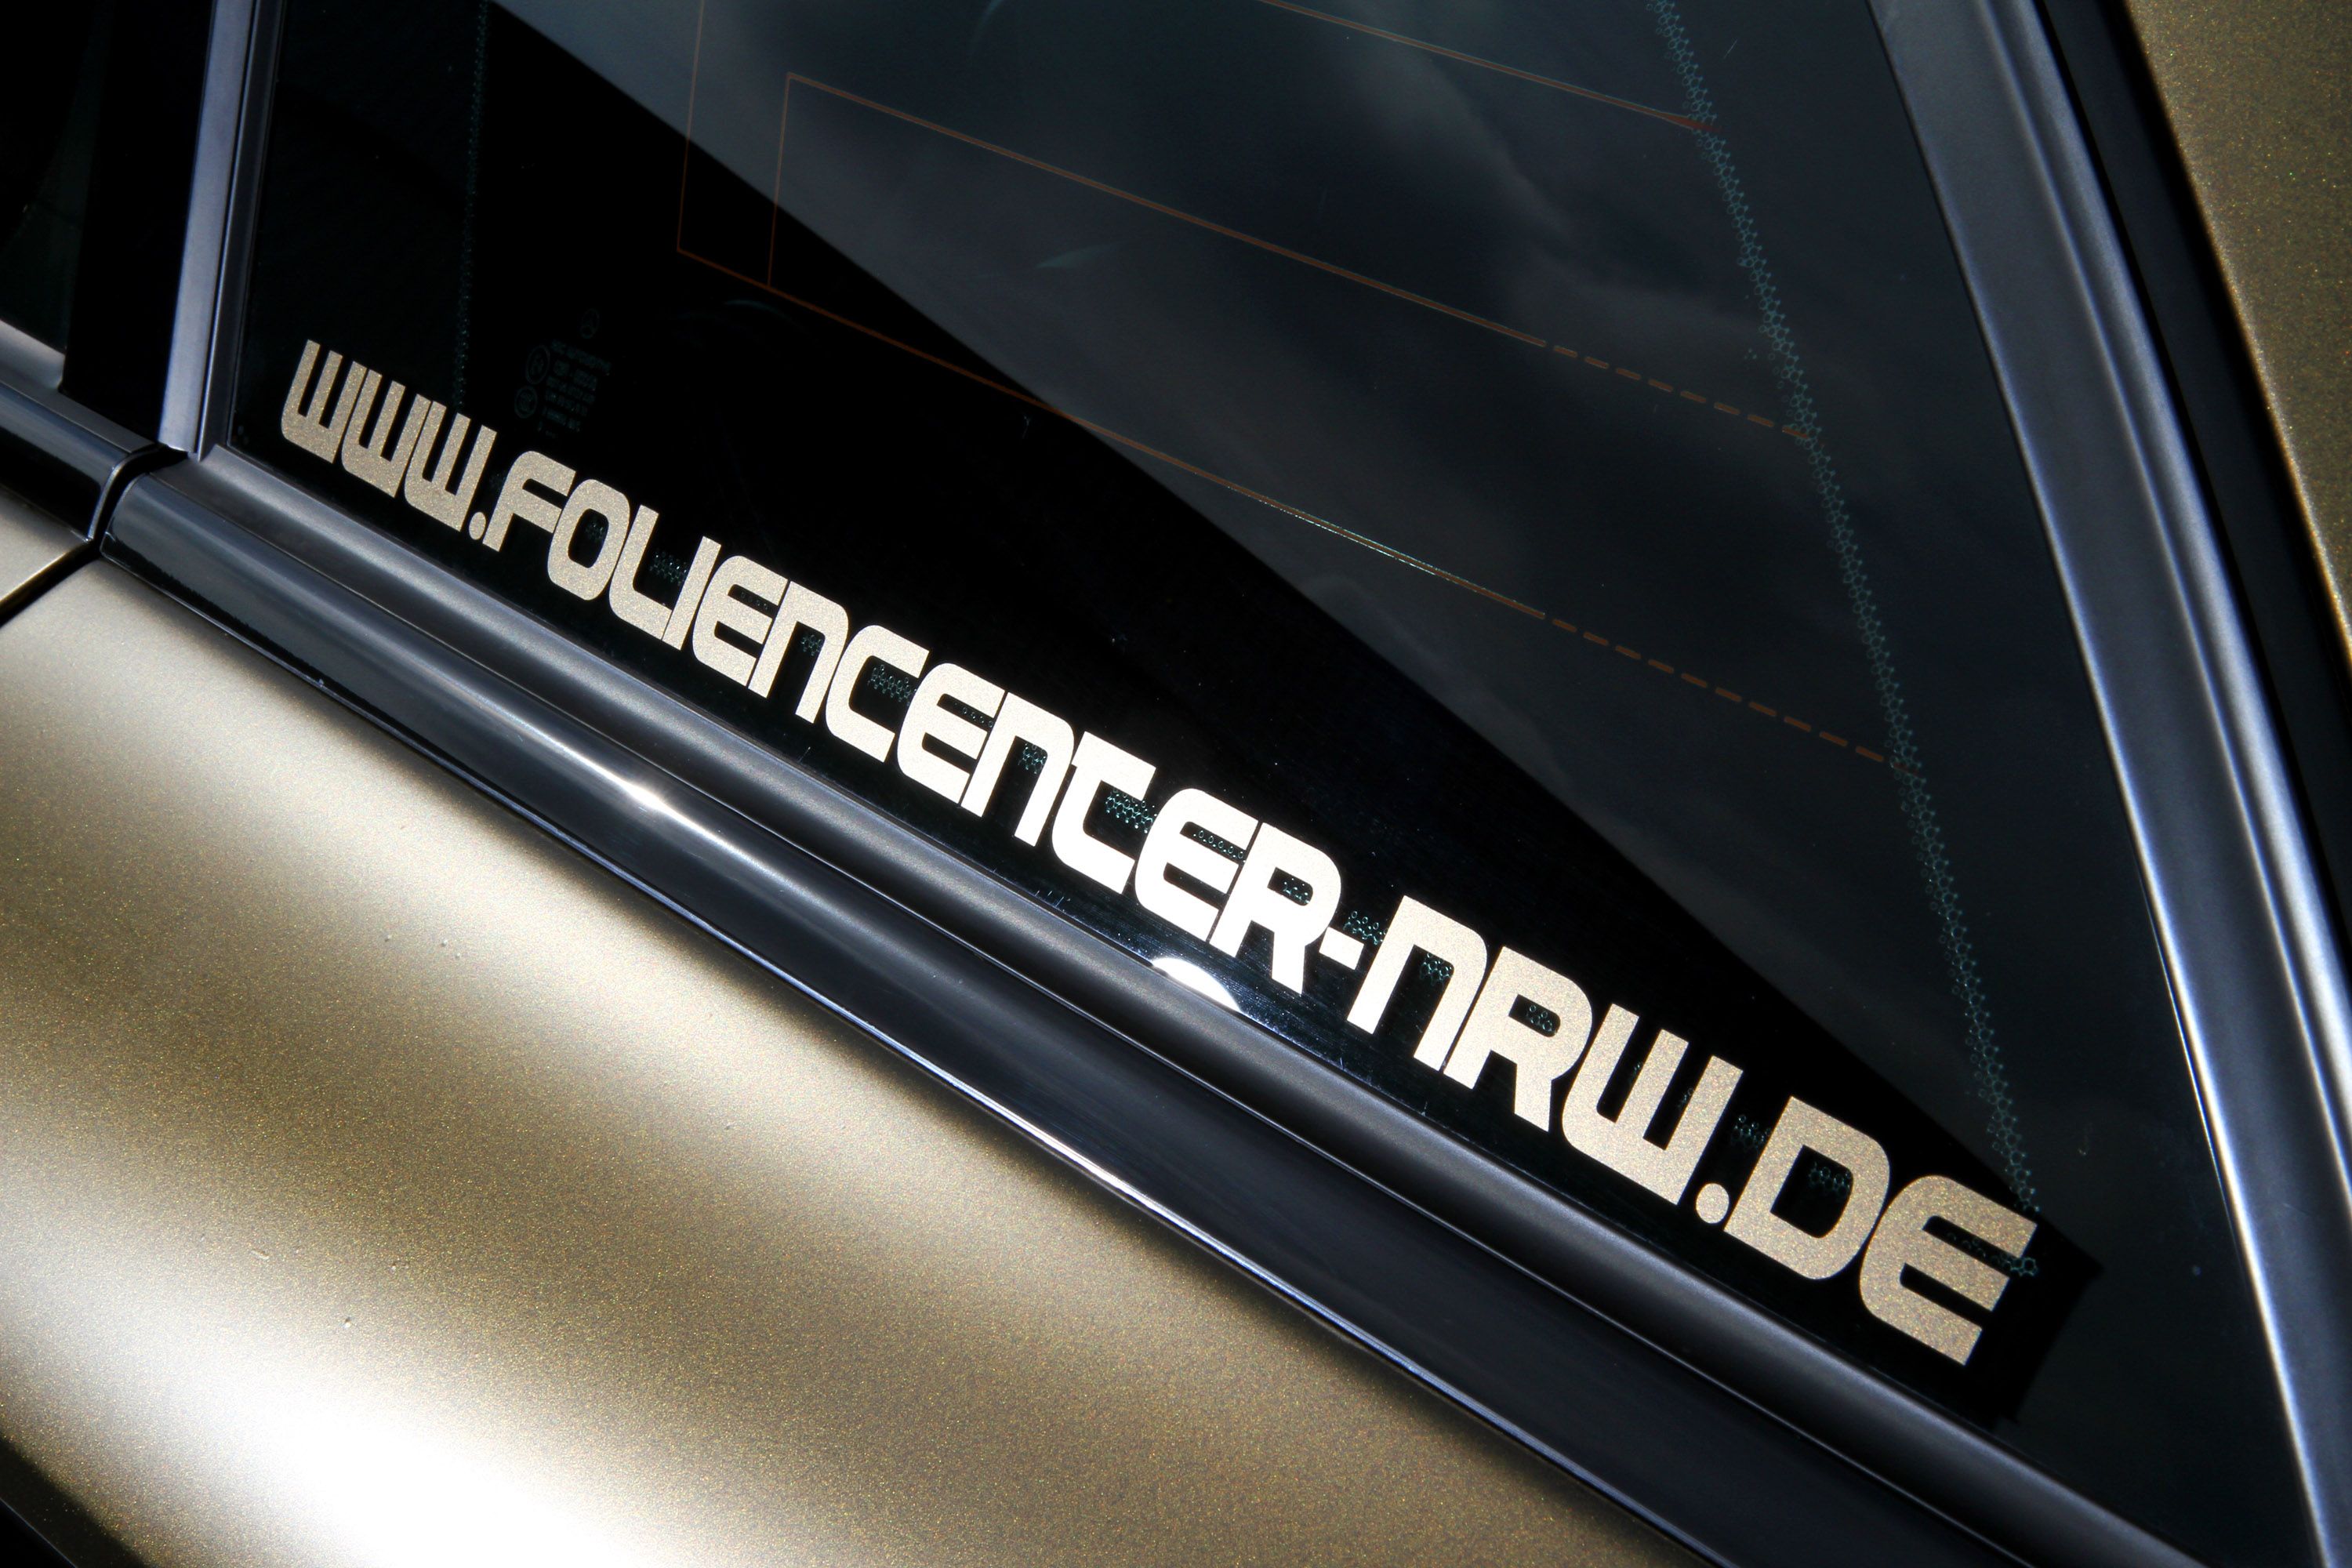 2013 Mercedes-Benz C63 AMG by FolienCenter-NRW